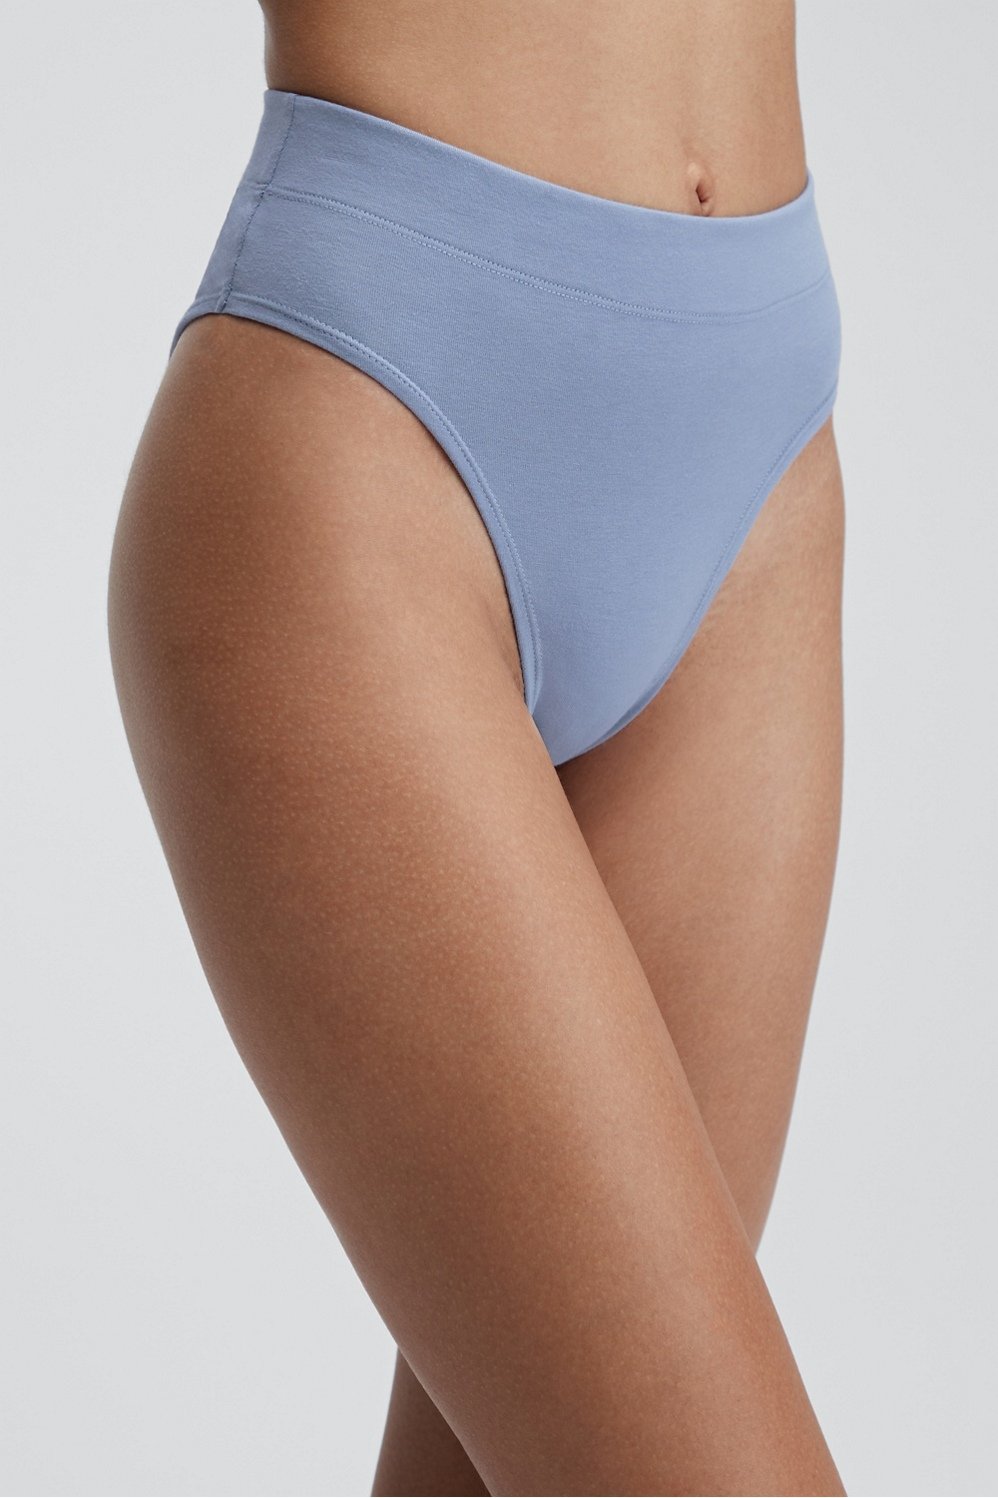 1To Finity Women's Seamless Cotton Spandex Underwear Stretch